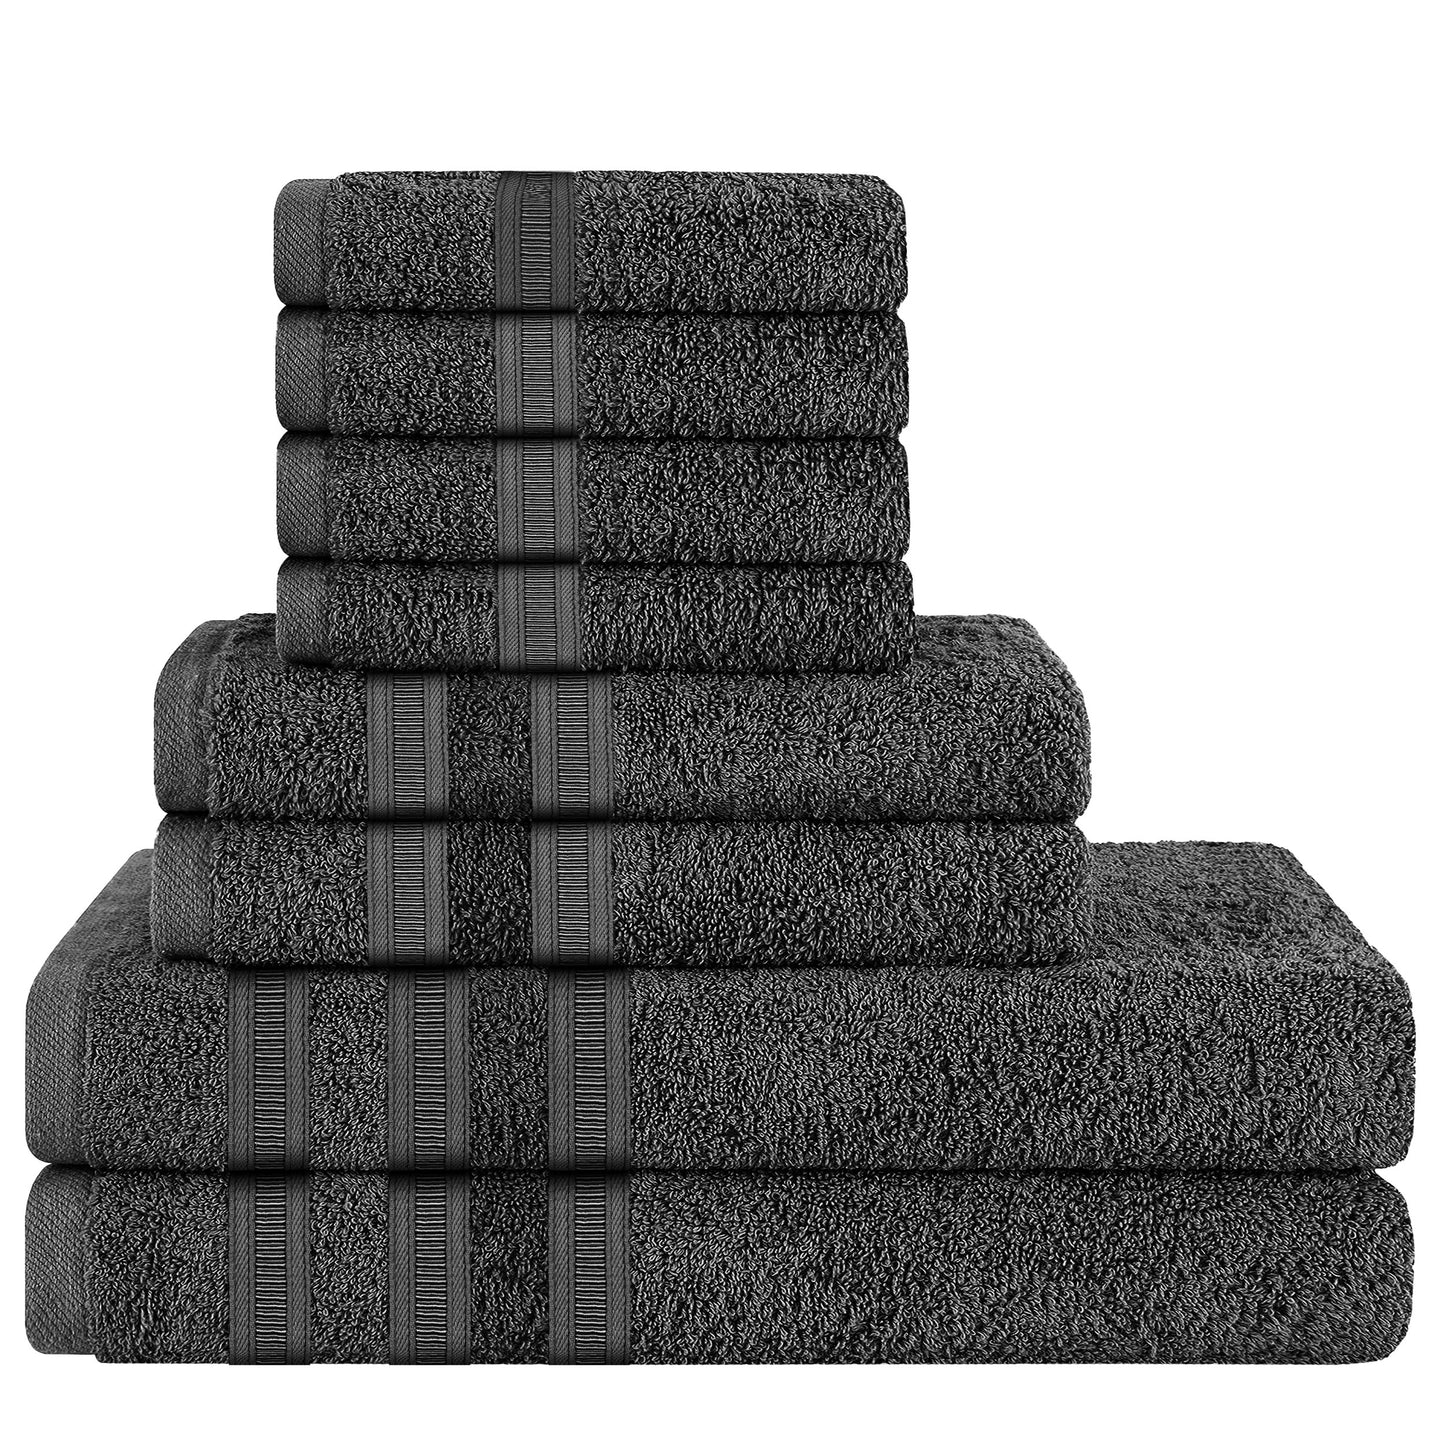 8 Piece Towels Bale Set 100% Cotton 600 GSM Ritz Highly Absorbent & Quick Dry Super Soft Bathroom Towel Sets